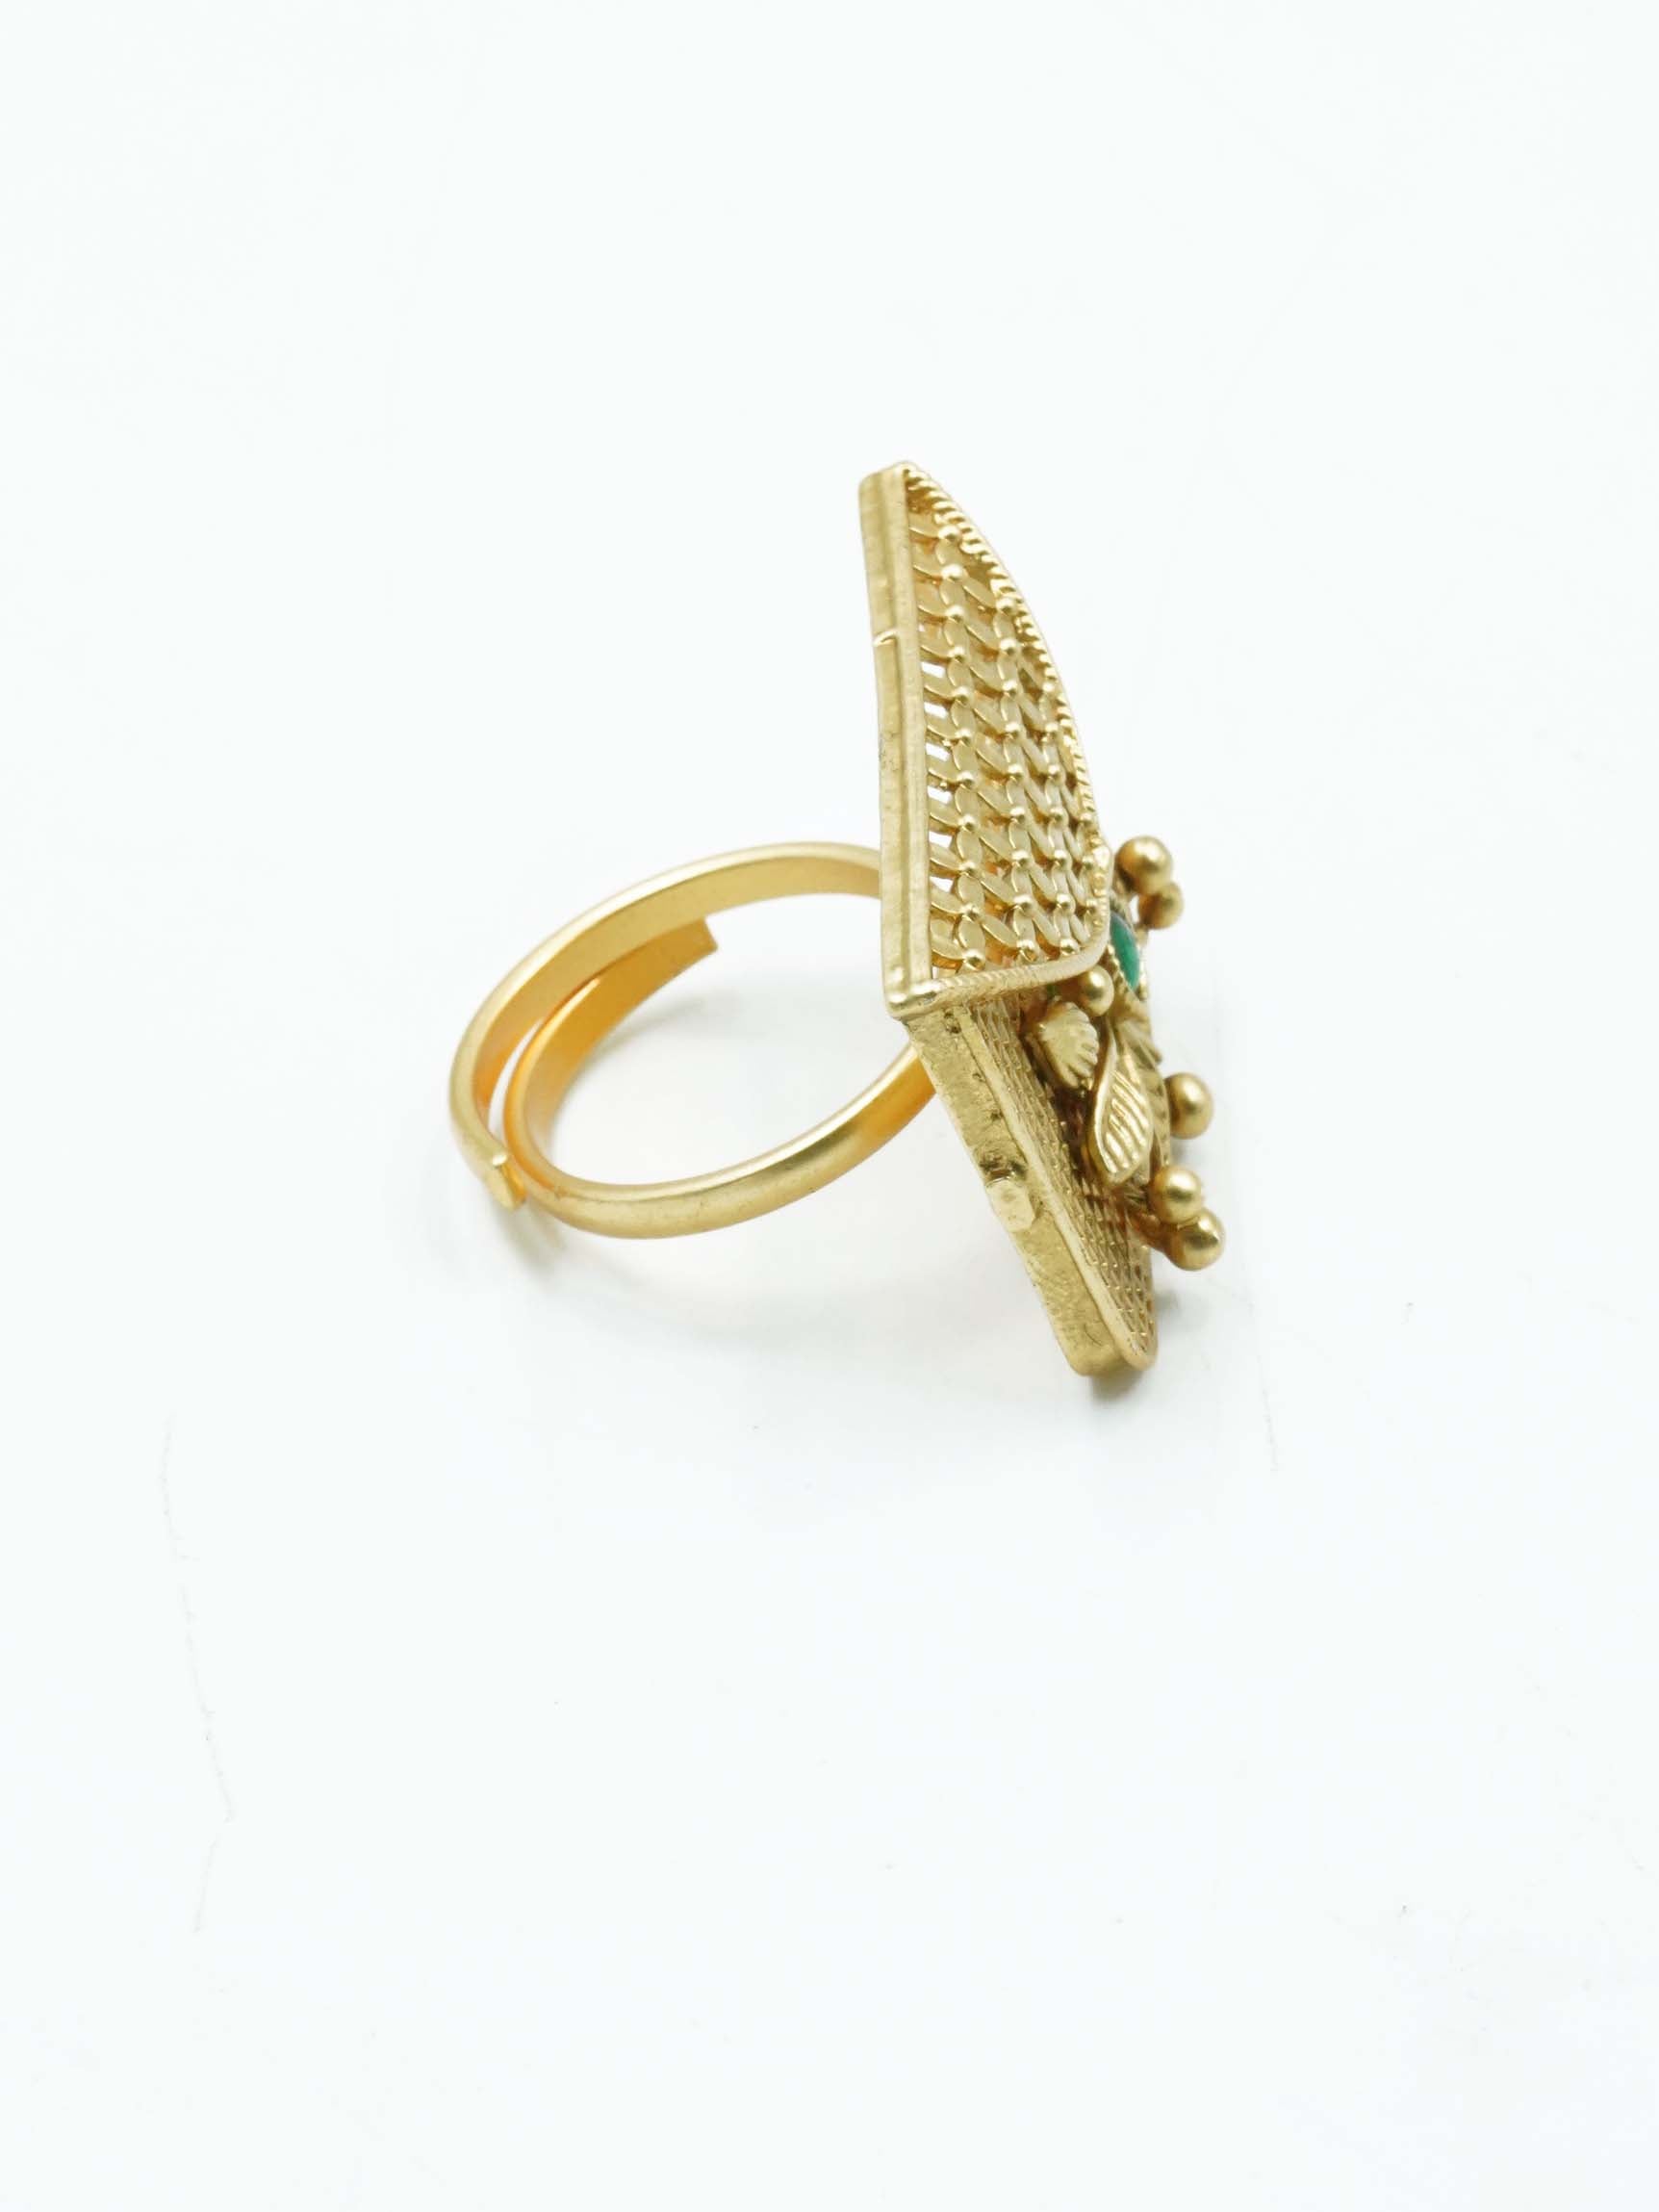 Antique Gold Plated Adjustable Size Designer Finger ring with Stones 11071N